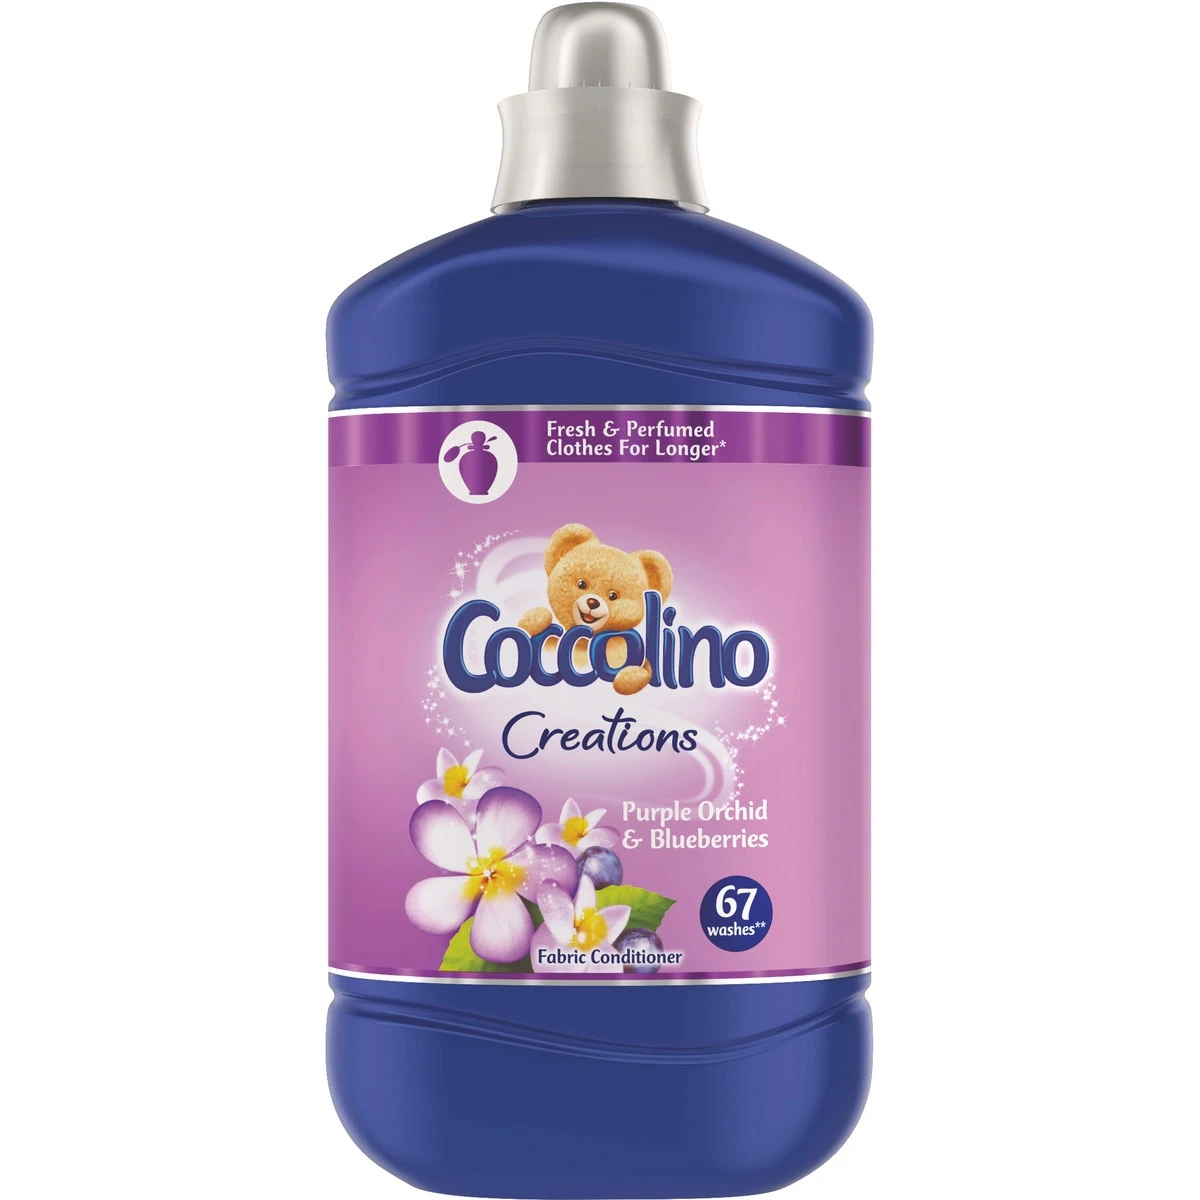 Coccolino Creations Purple Orchid & Blueberries öblítőkoncentrátum 67 mosás 1680 ml